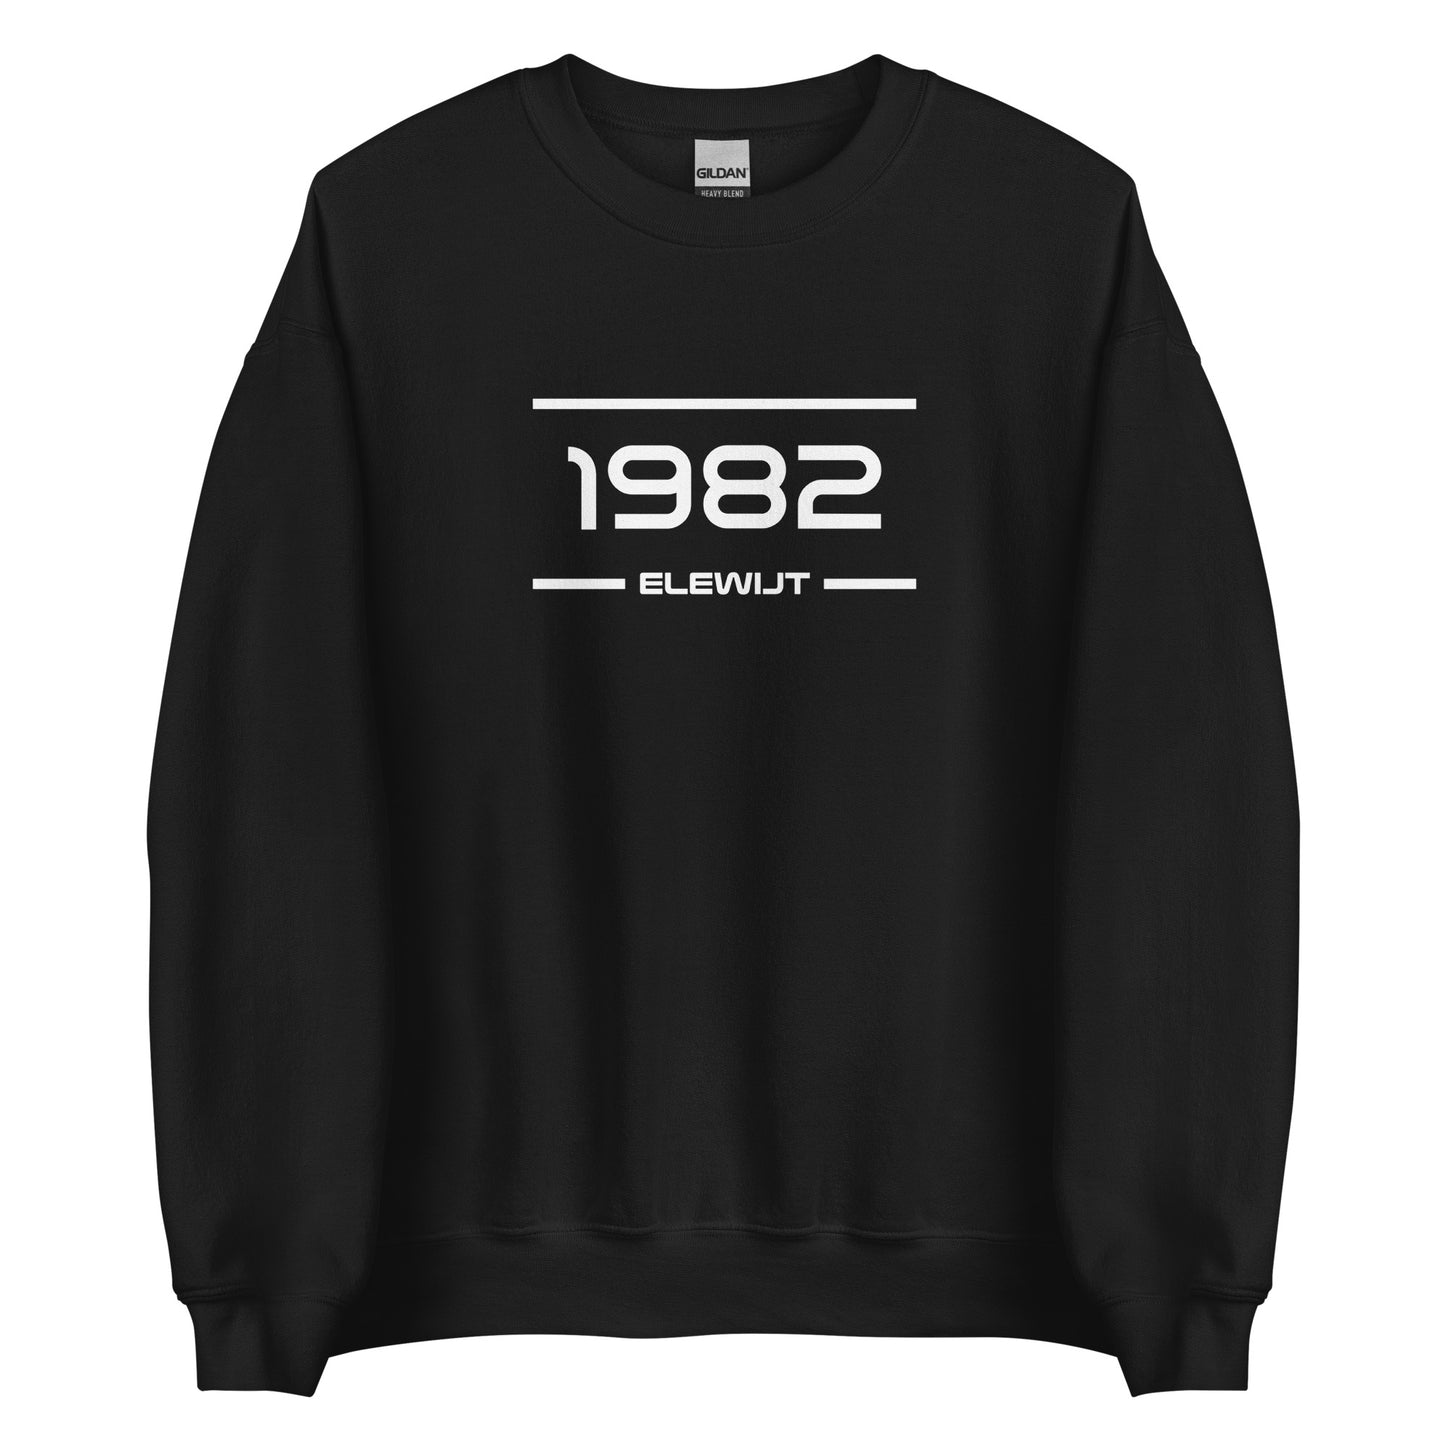 Sweater - 1982 - Elewijt (M/V)